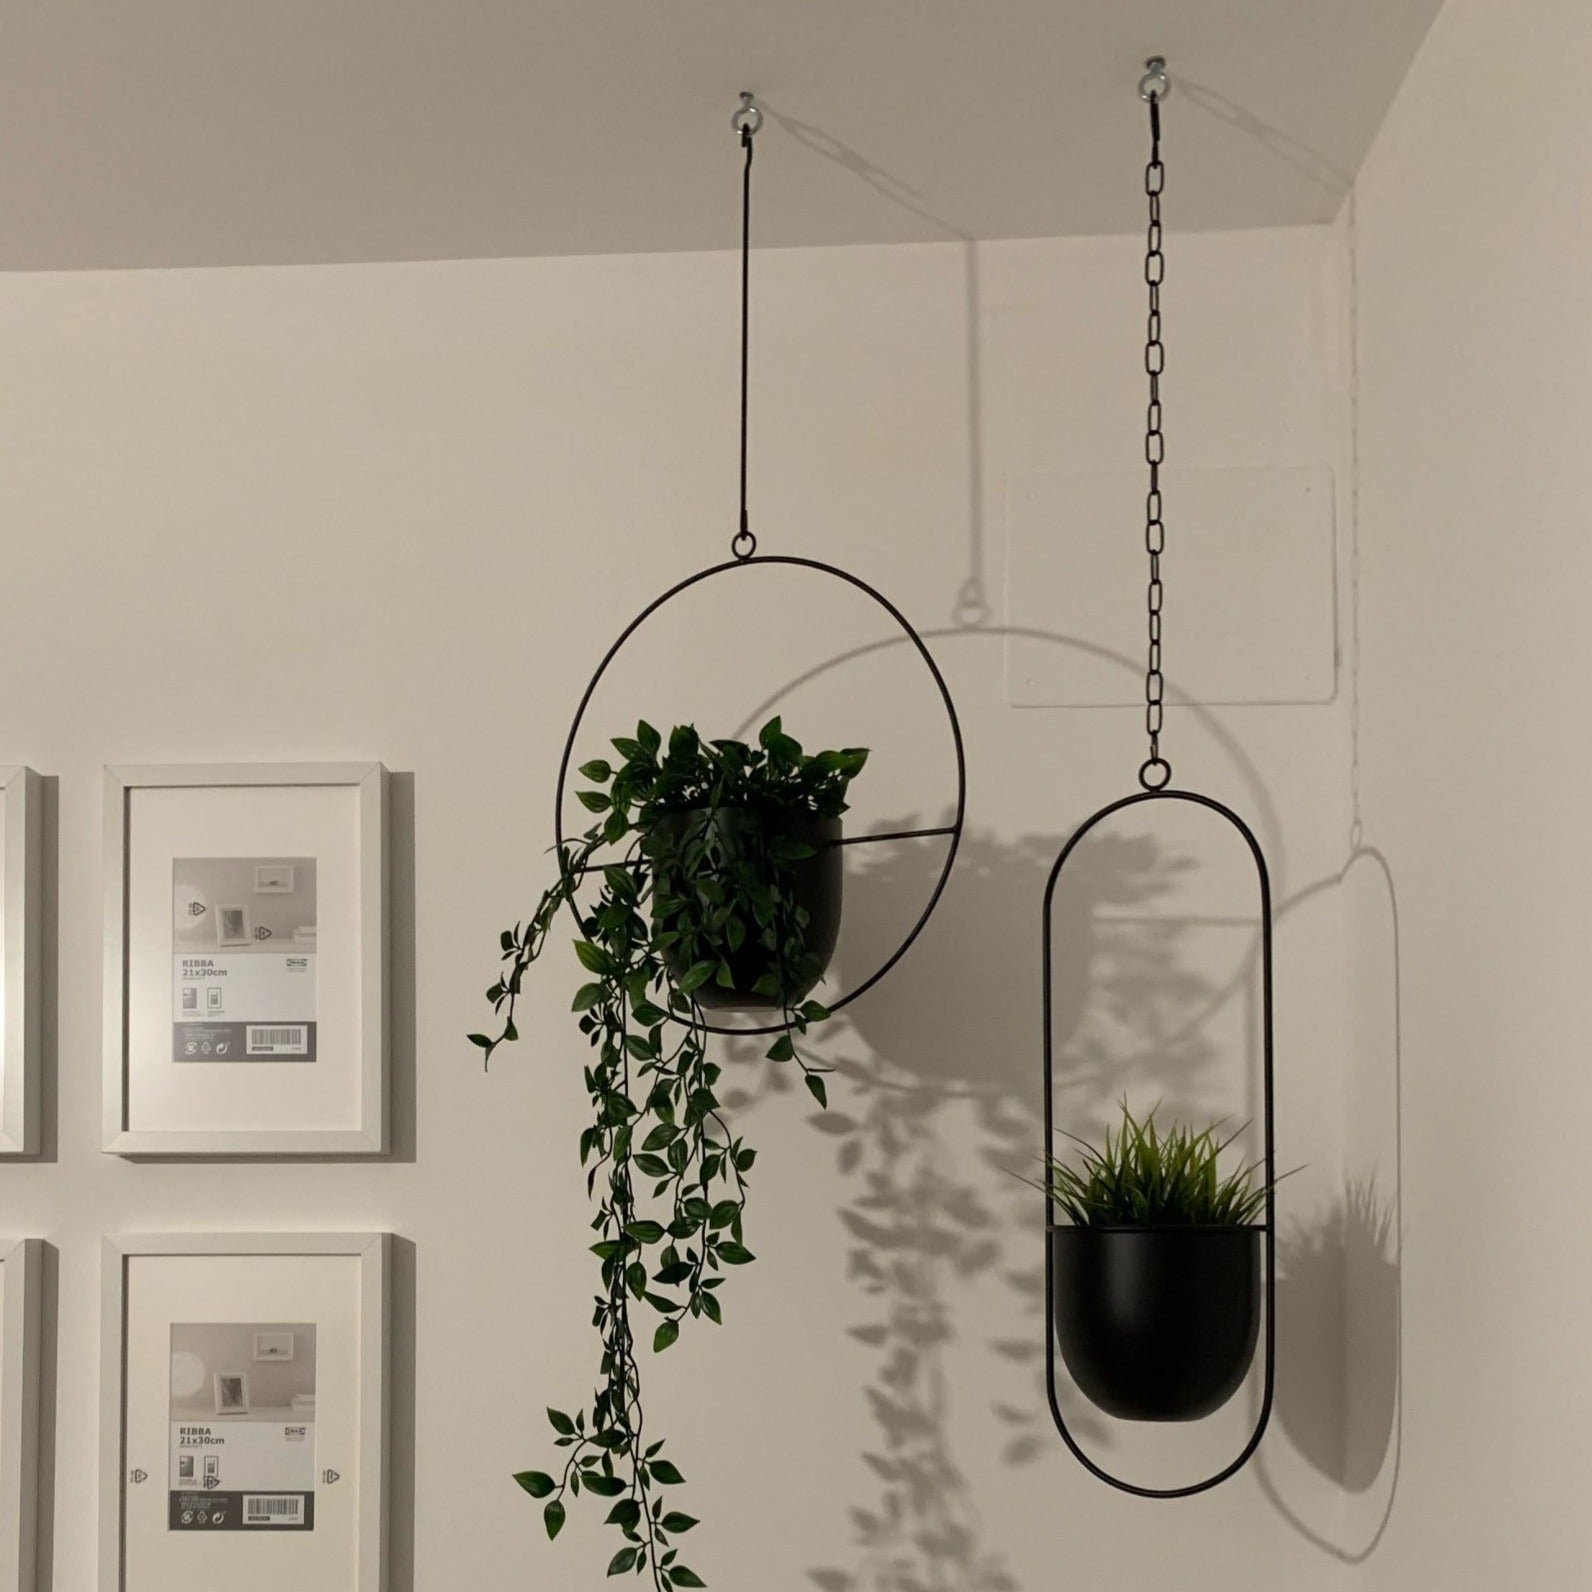 Decorative Metal Chain Hanging Pots